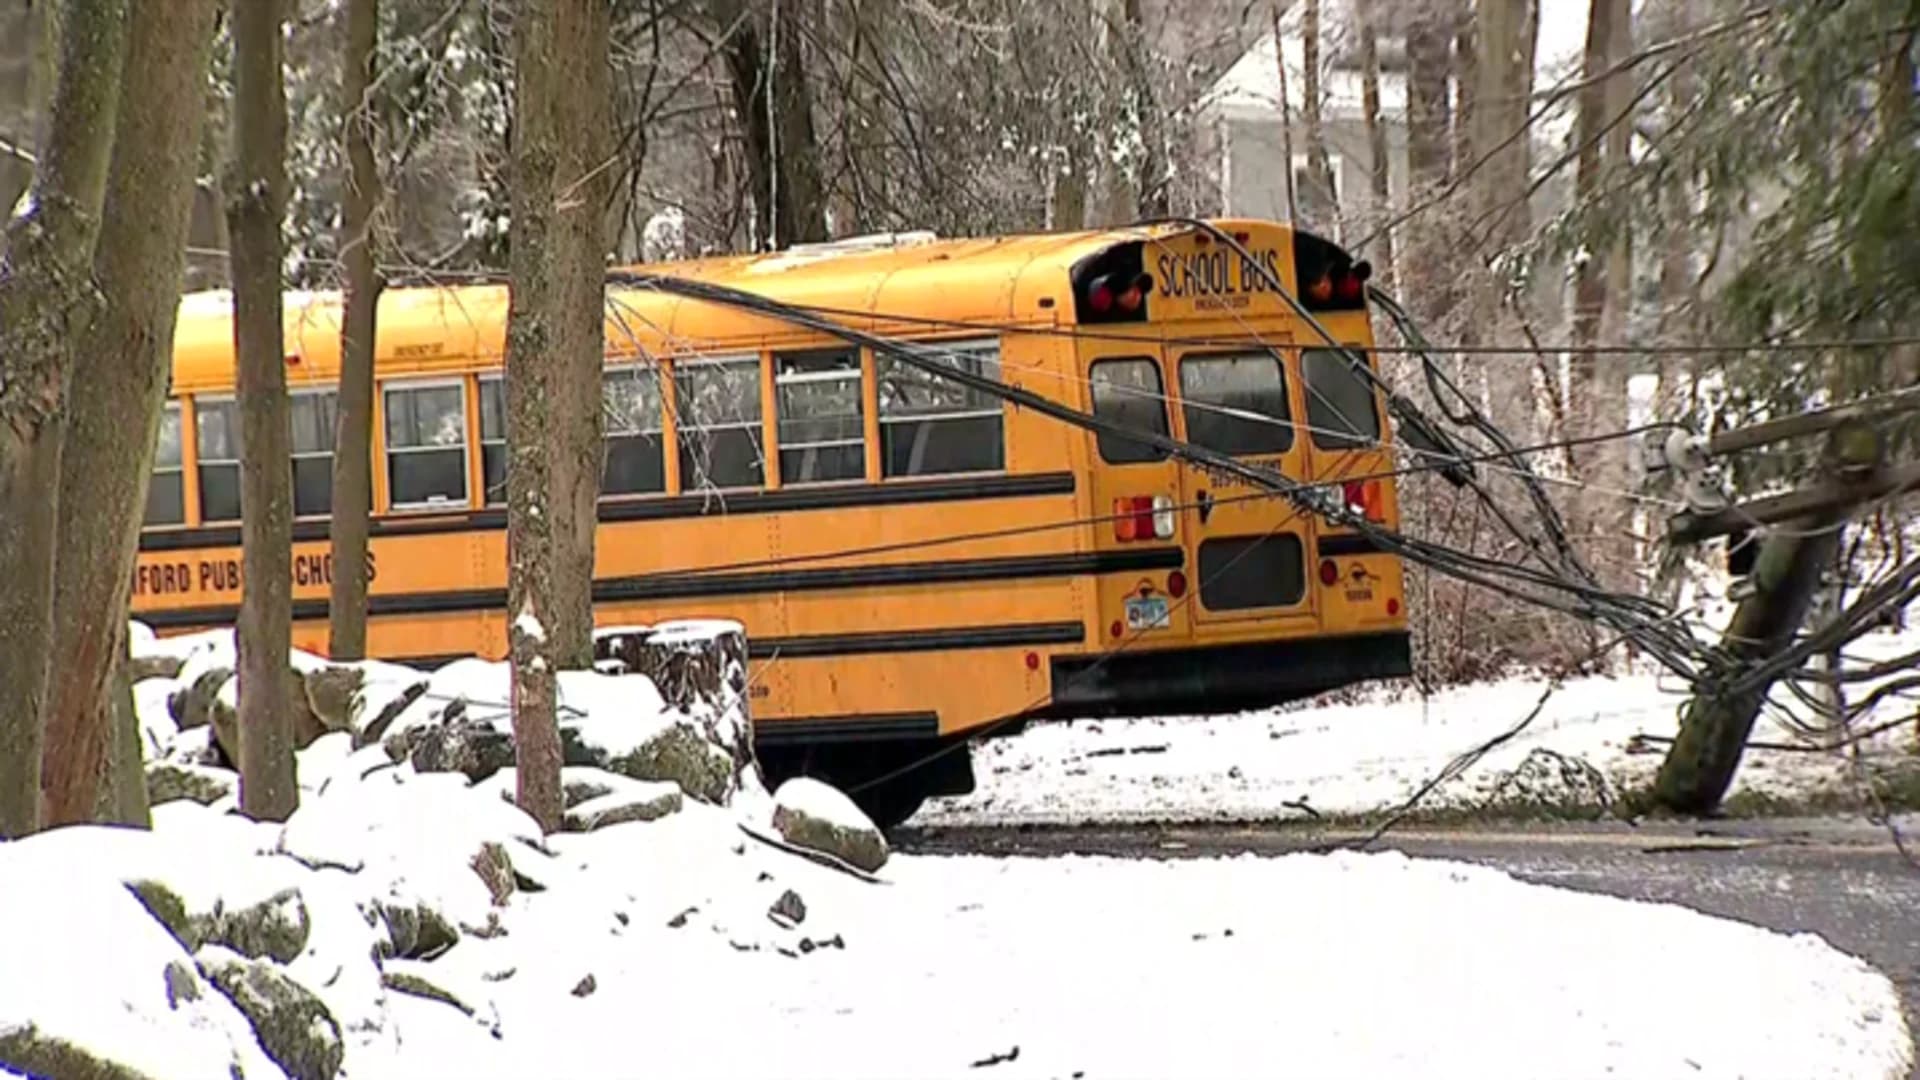 Live wires trap children after school bus strikes pole in Stamford